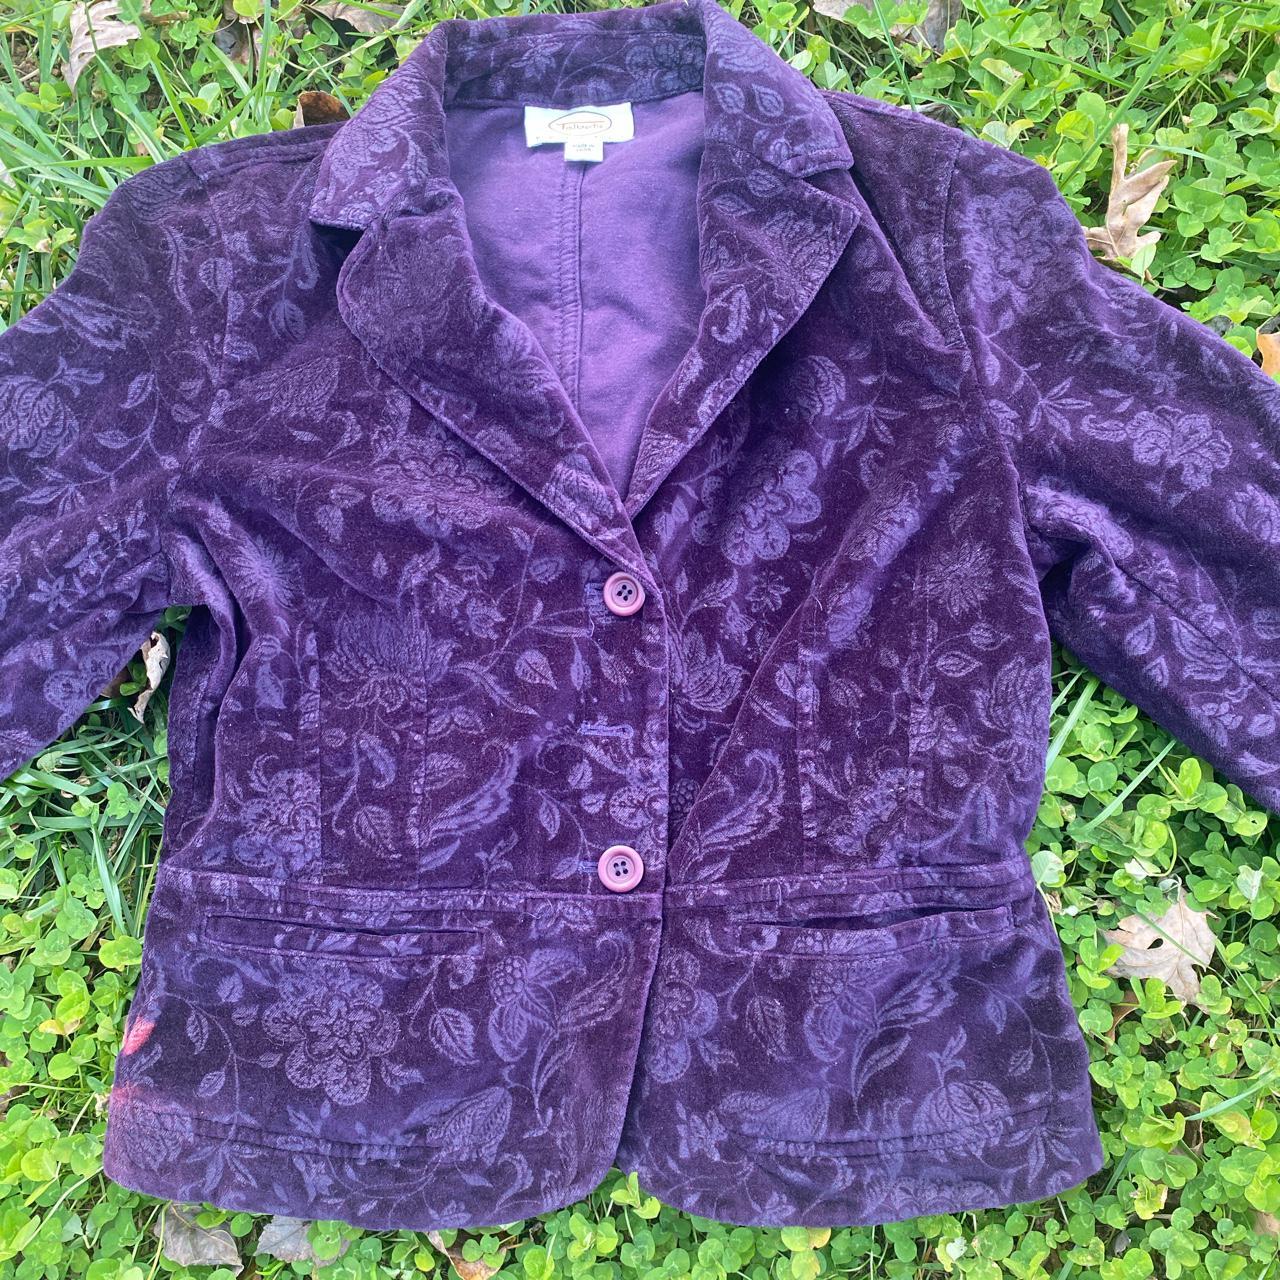 Product Image 2 - Purple velvet jacket has a